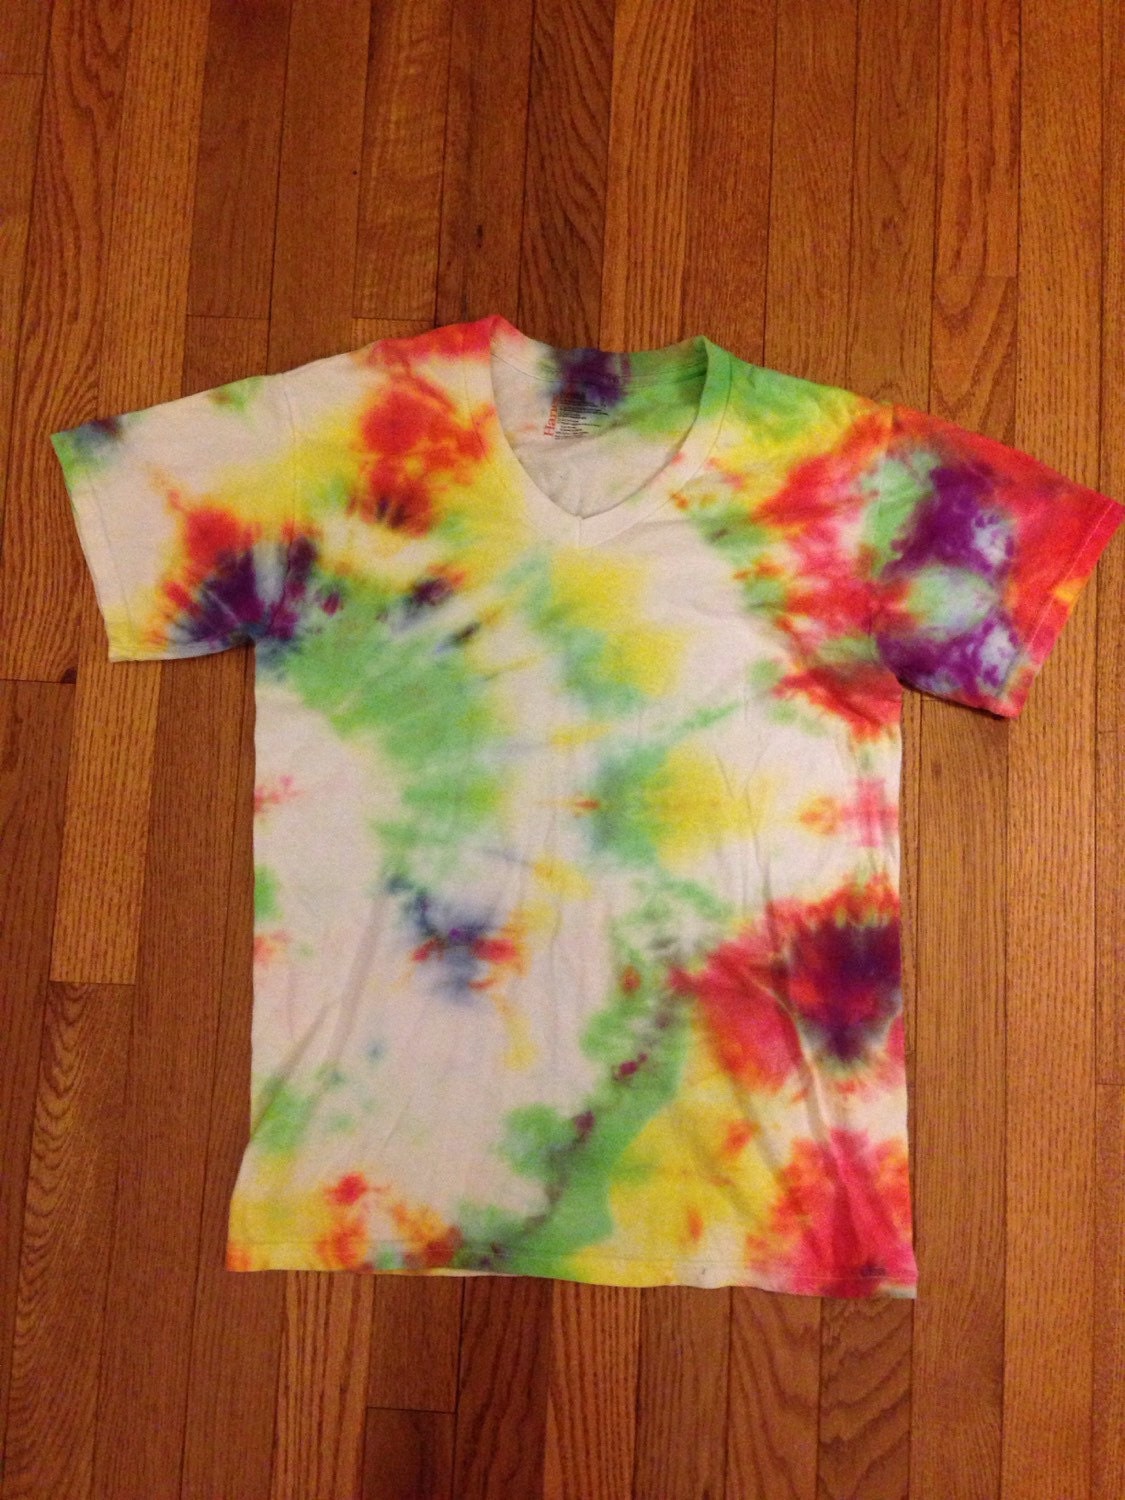 Small. V Neck Tye Dye shirt. Homemade. Multicolor.